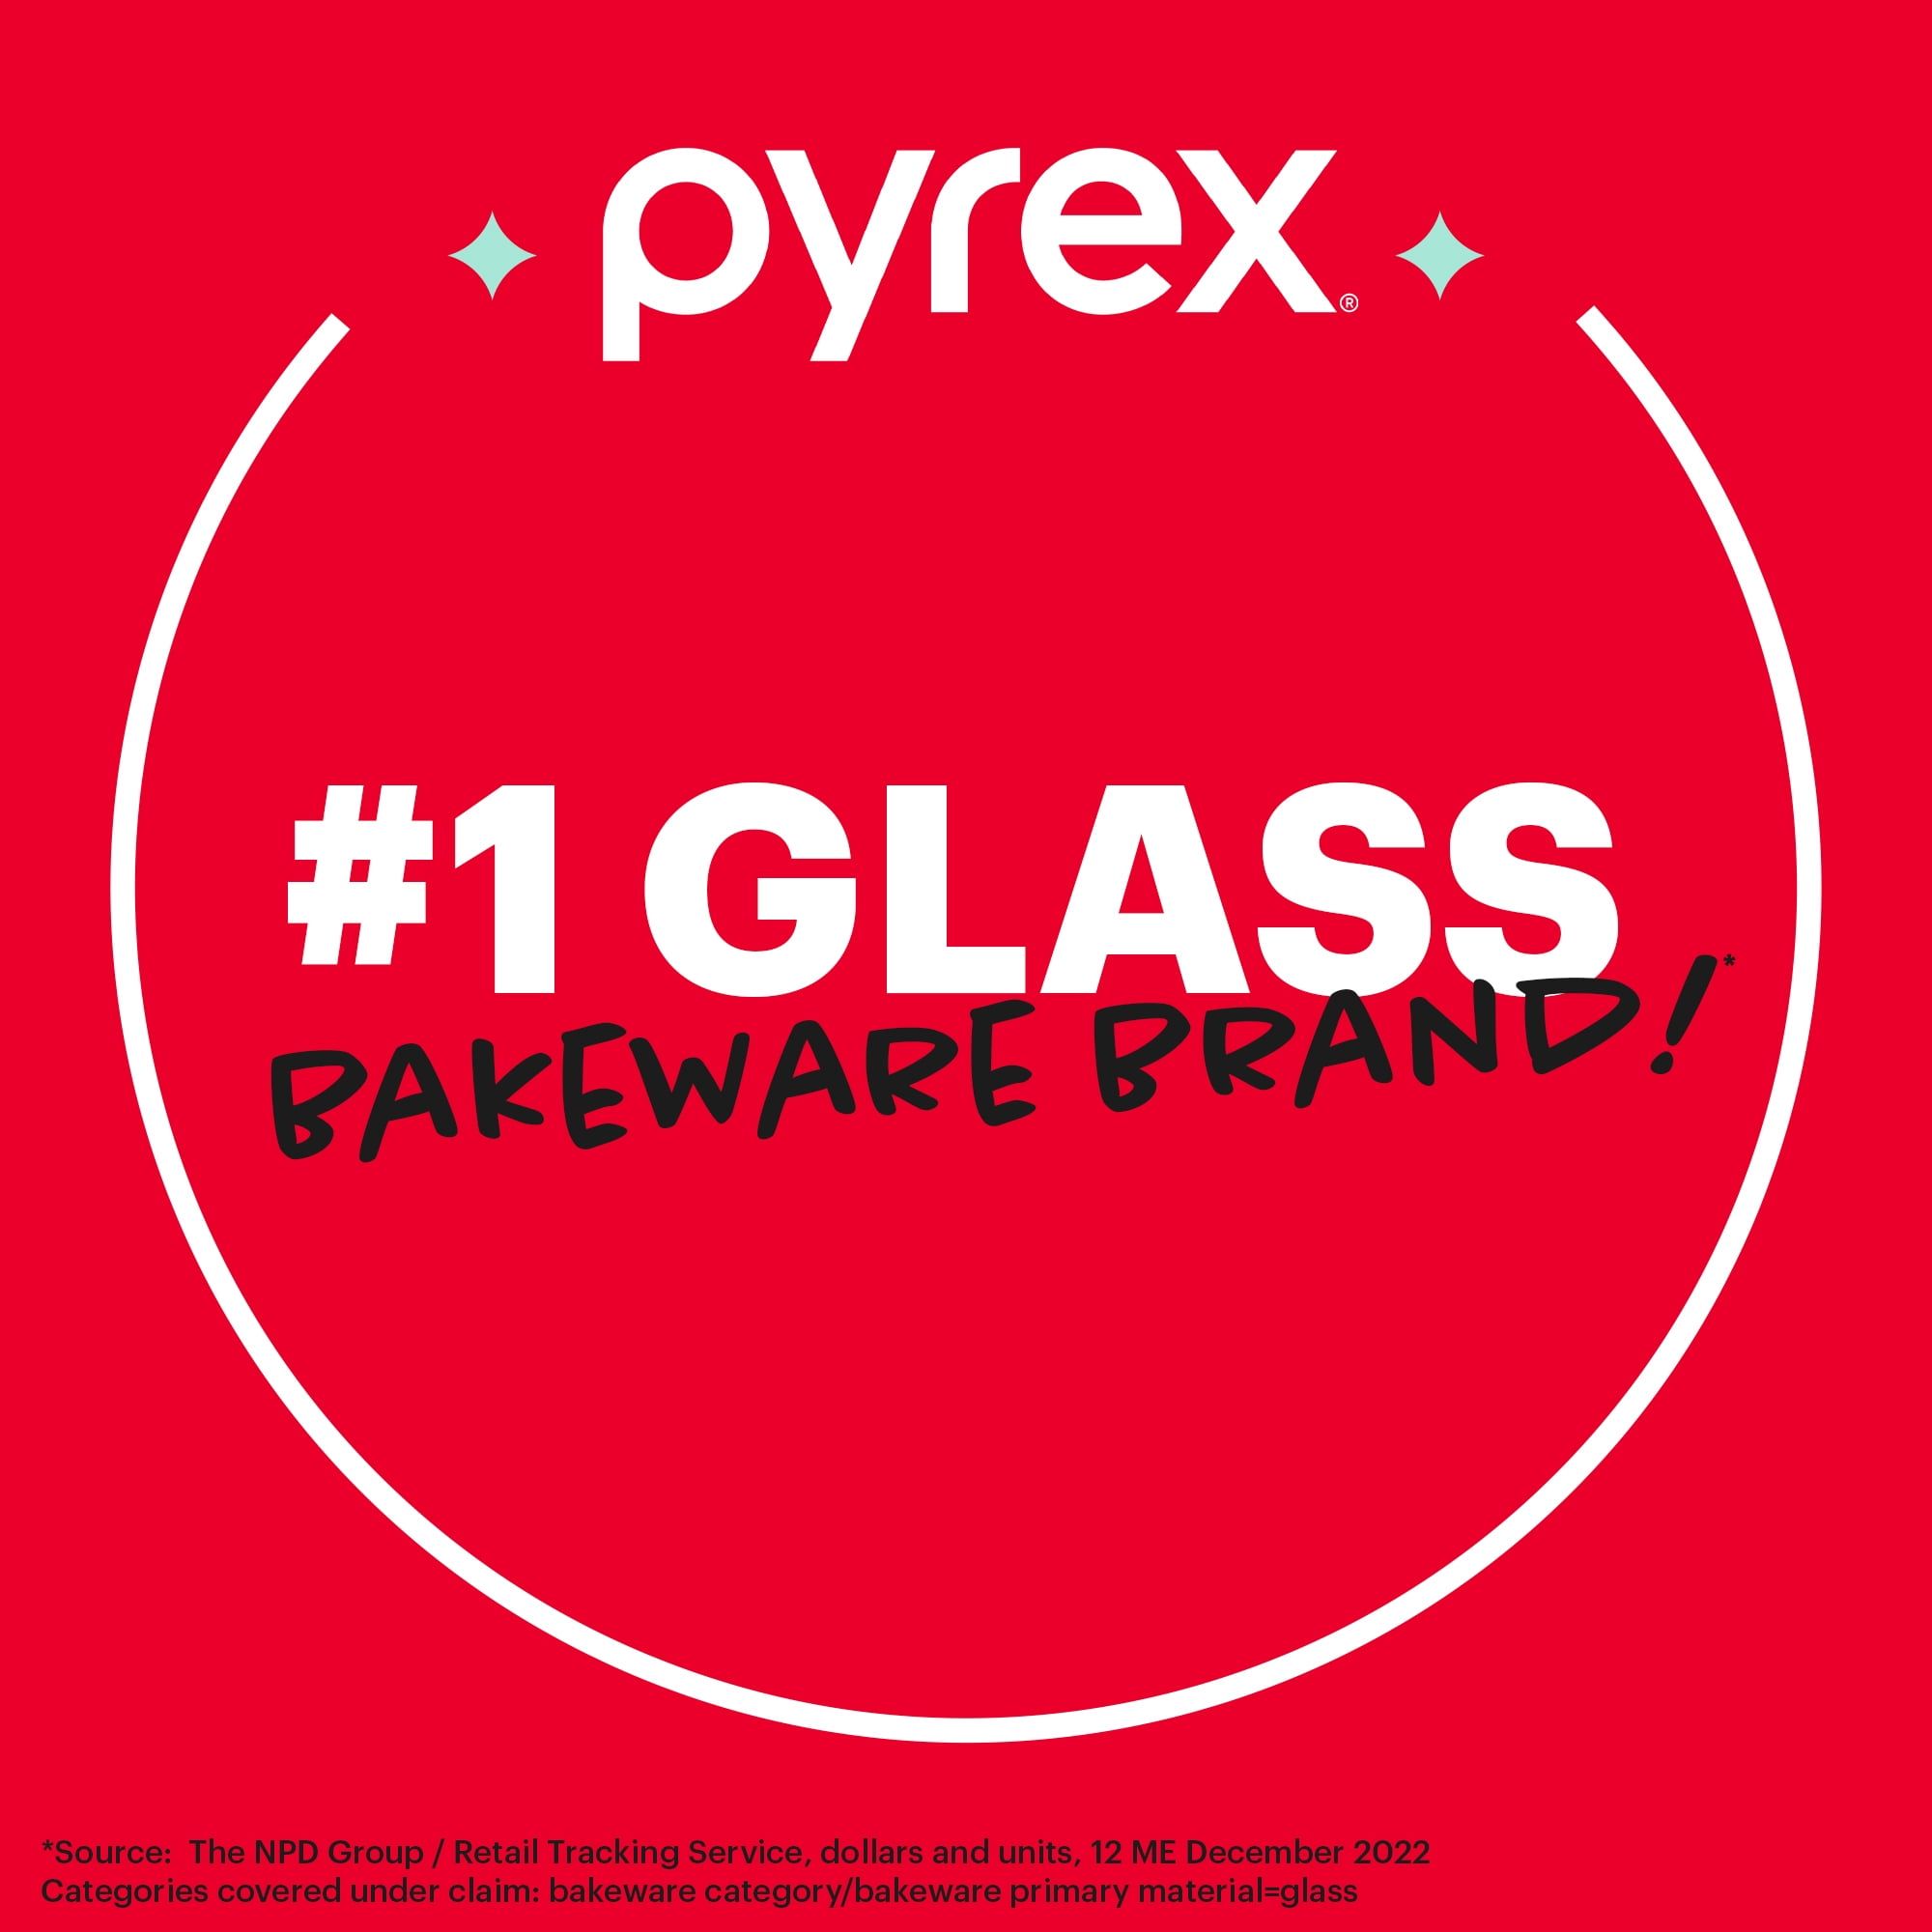 Pyrex - Pyrex Measuring Glass, 4 Cup, Shop